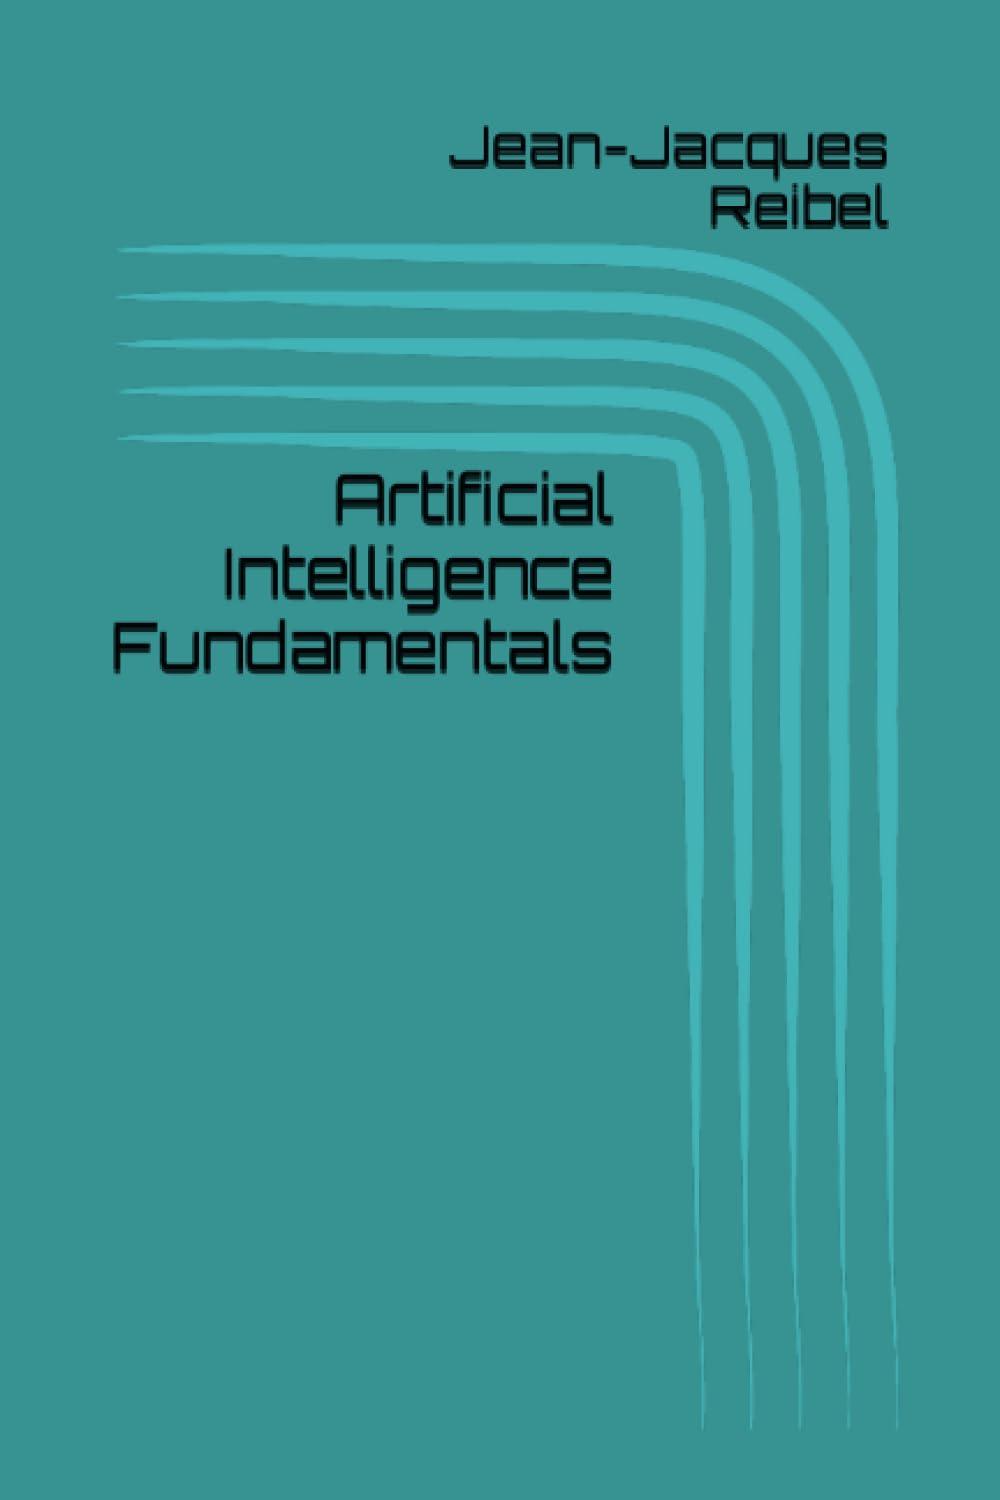 artificial intelligence fundamentals 1st edition jean-jacques reibel b0chl9l8w4, 979-8860821897